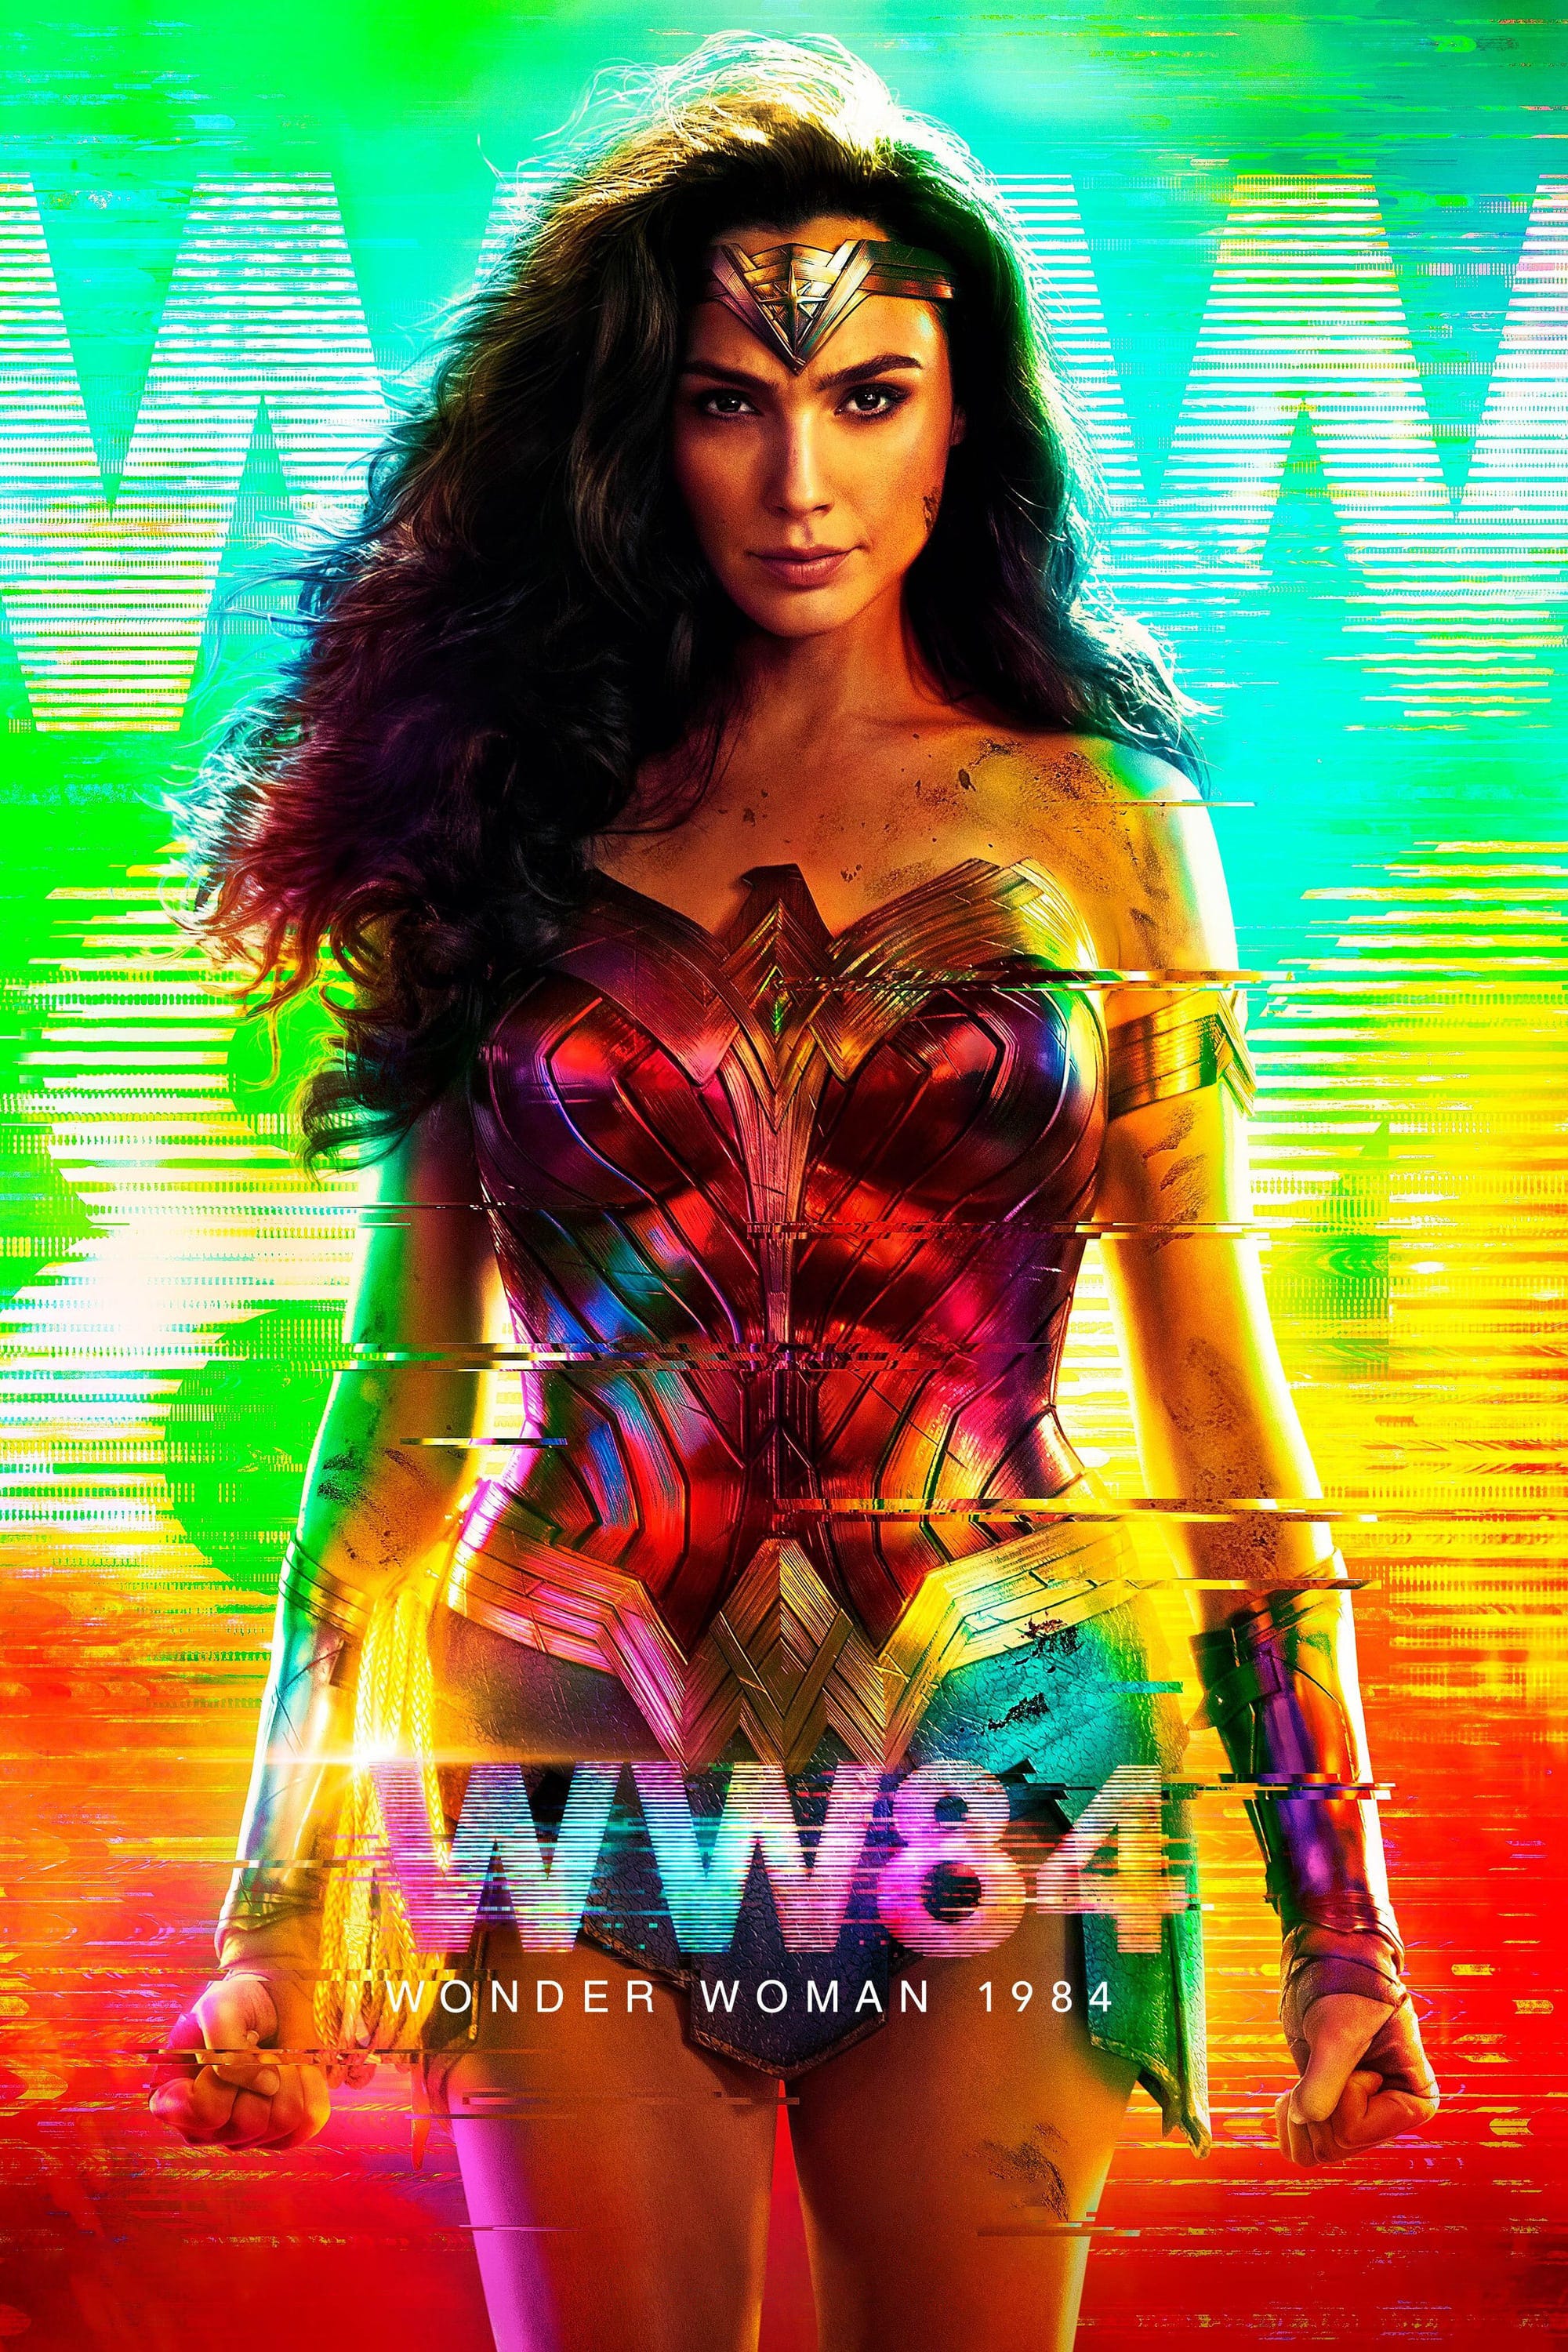 [MINI Super-HQ] Wonder Woman 1984 (2020) วันเดอร์วูเมน 1984 [IMAX] [1080p] [พากย์ไทย 5.1 + เสียงอังกฤษ 5.1] [บรรยายไทย + อังกฤษ] [เสียงไทย + ซับไทย] [DOSYAUPLOAD]